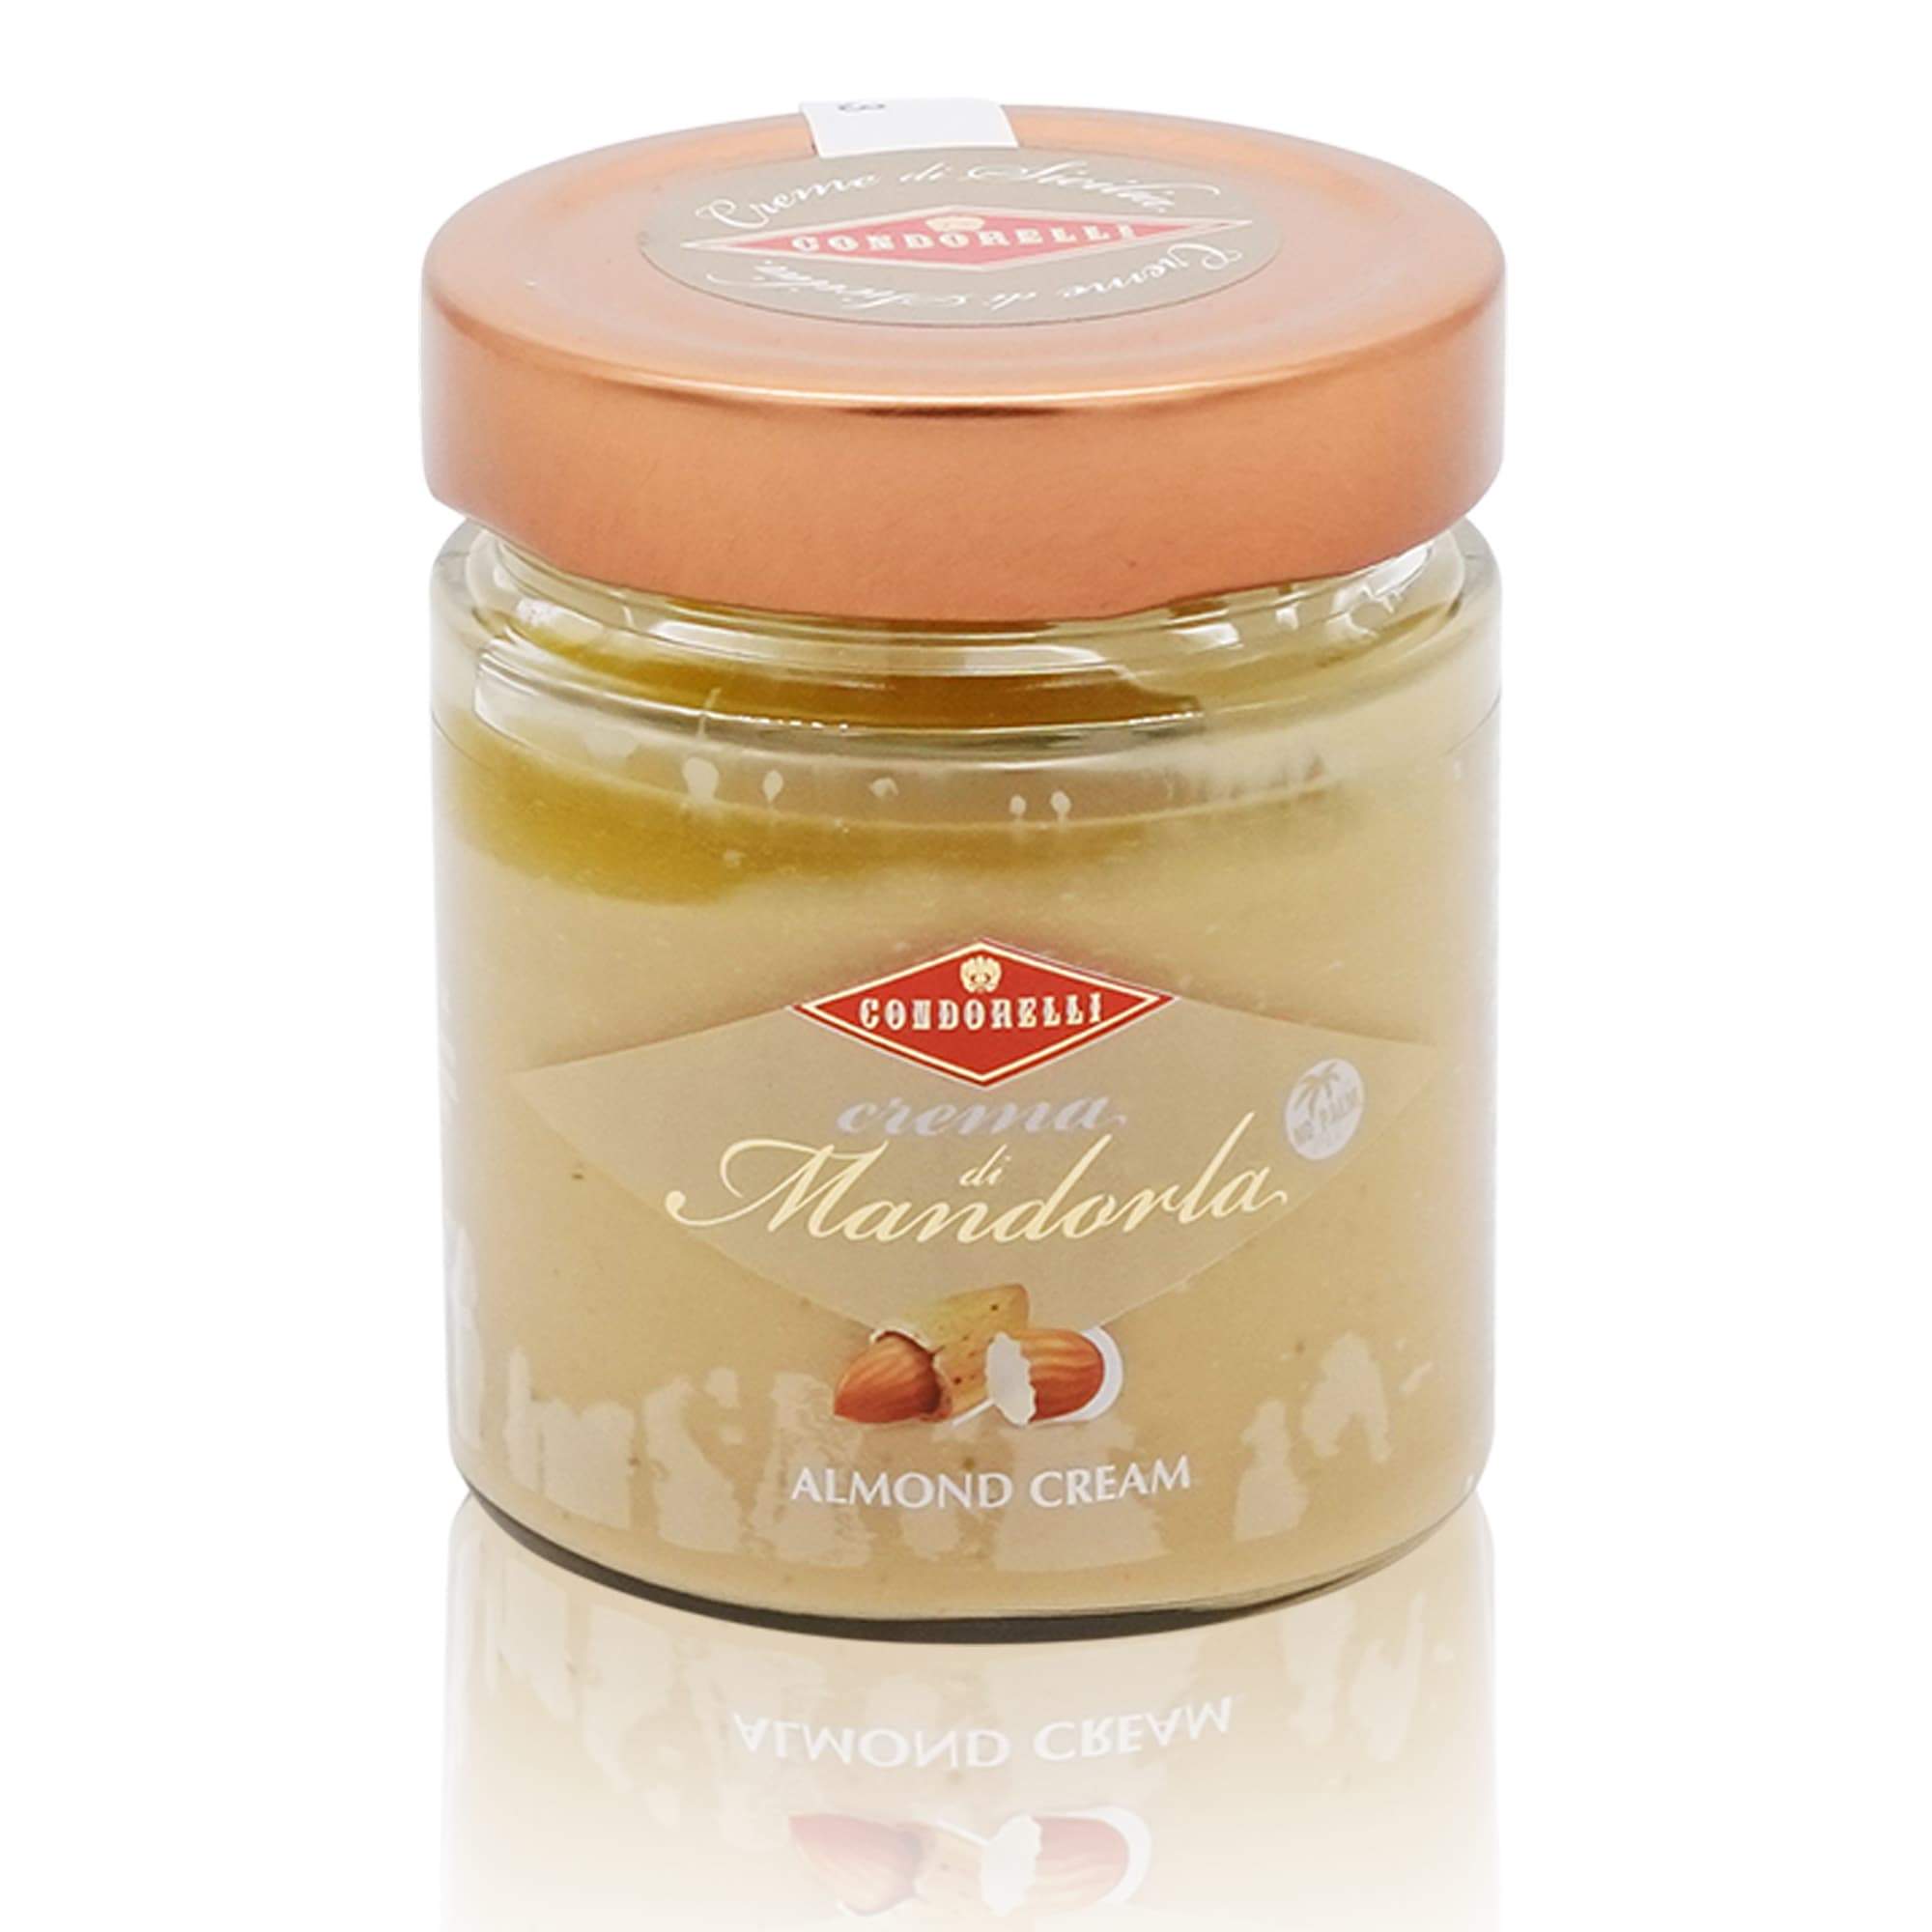 CONDORELLI Crema di Mandorla – Mandelcreme - 0,190kg - italienisch-einkaufen.de